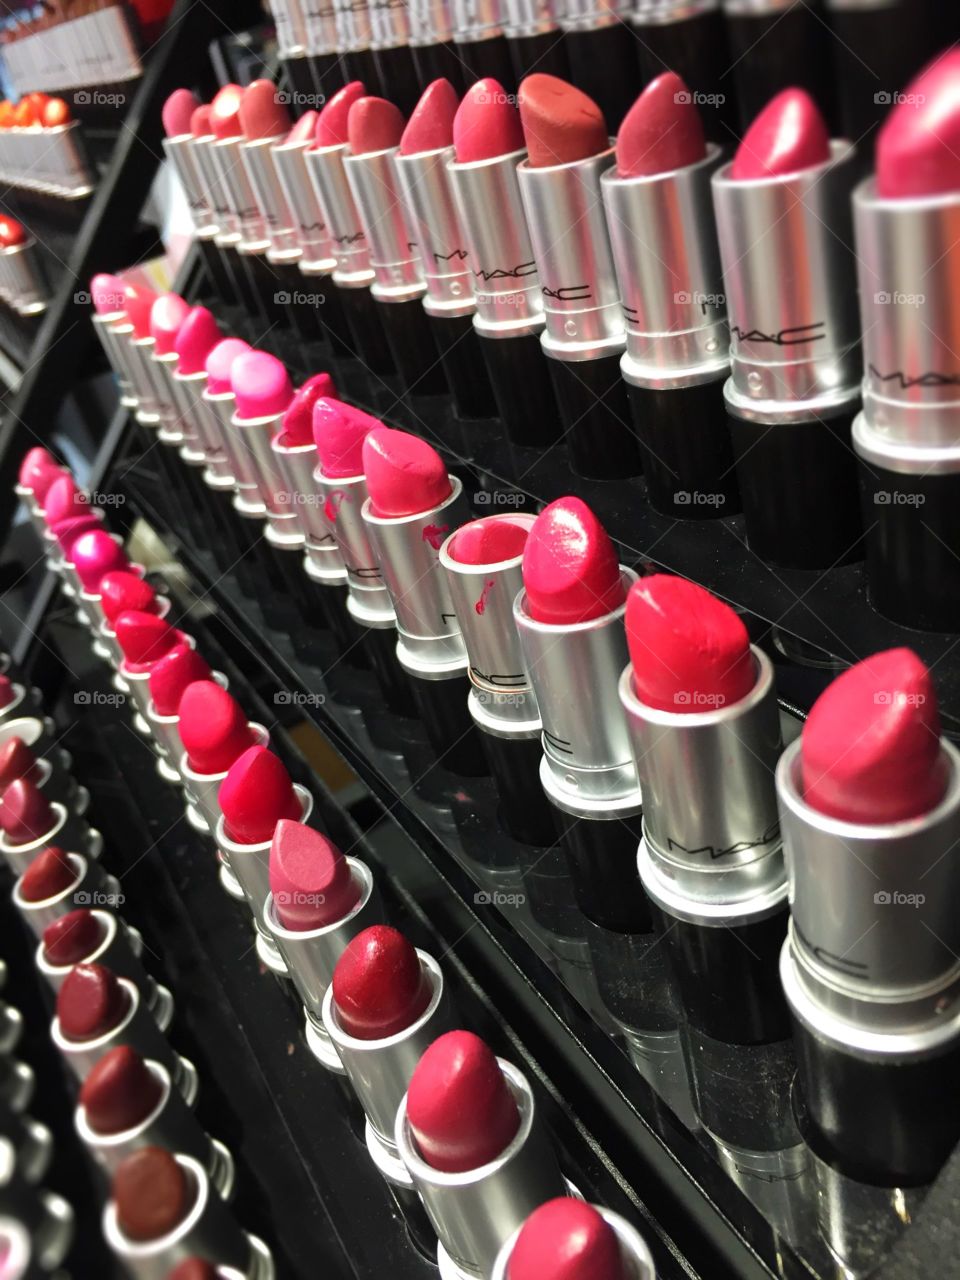 Lipsticks all in a row